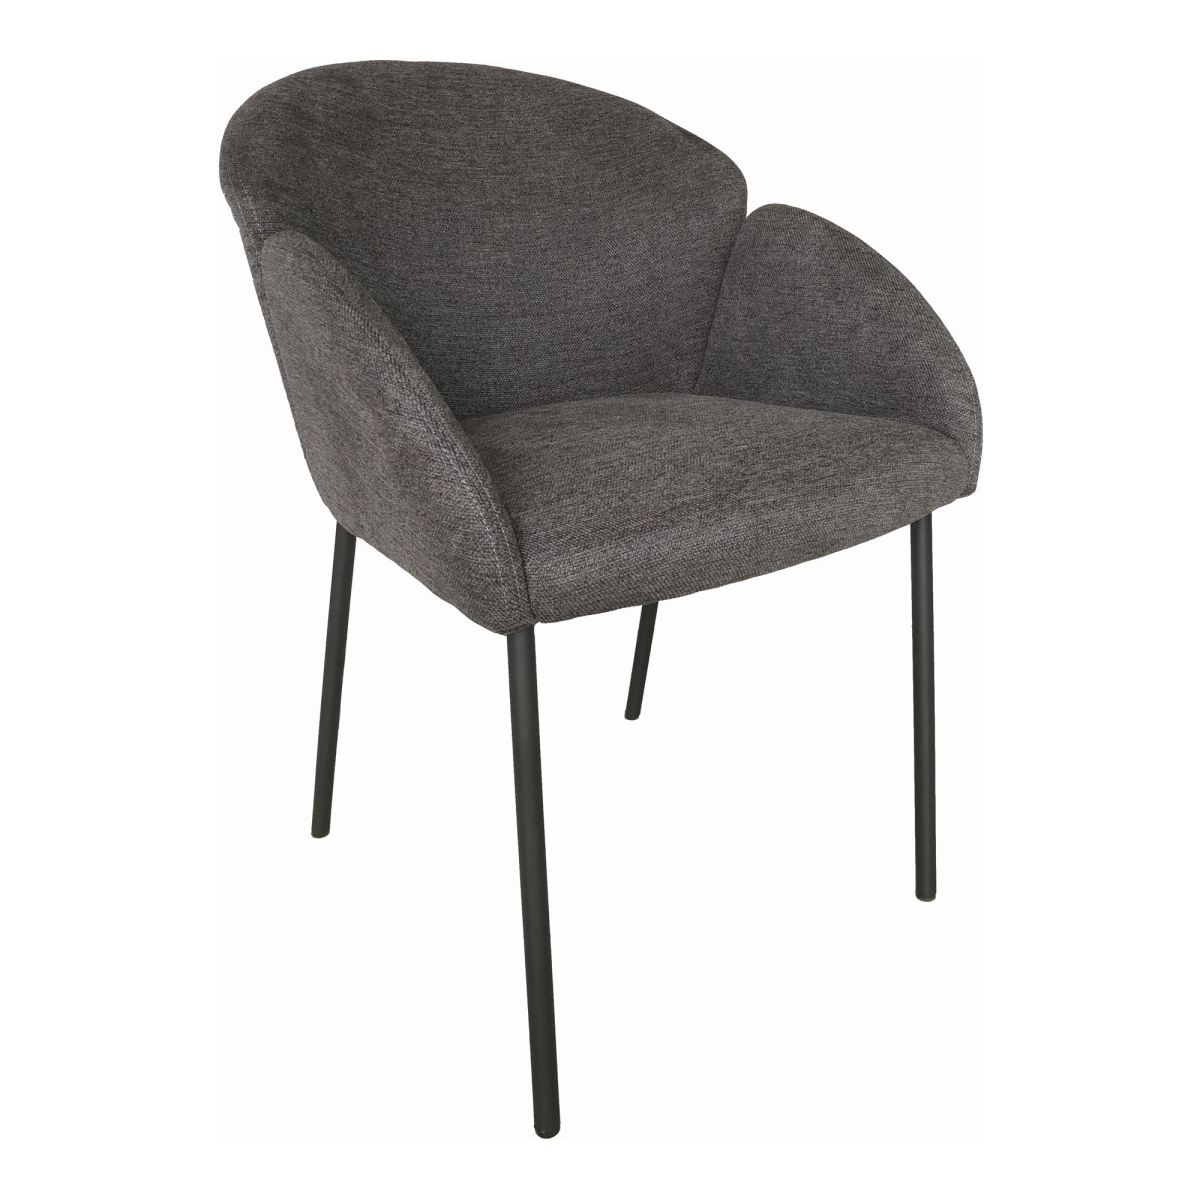 Hk-1018-25 Gigi Dining Chair Dark, Fabric & Iron, Grey - 22 X 24 X 31.5 In. - Set Of 2